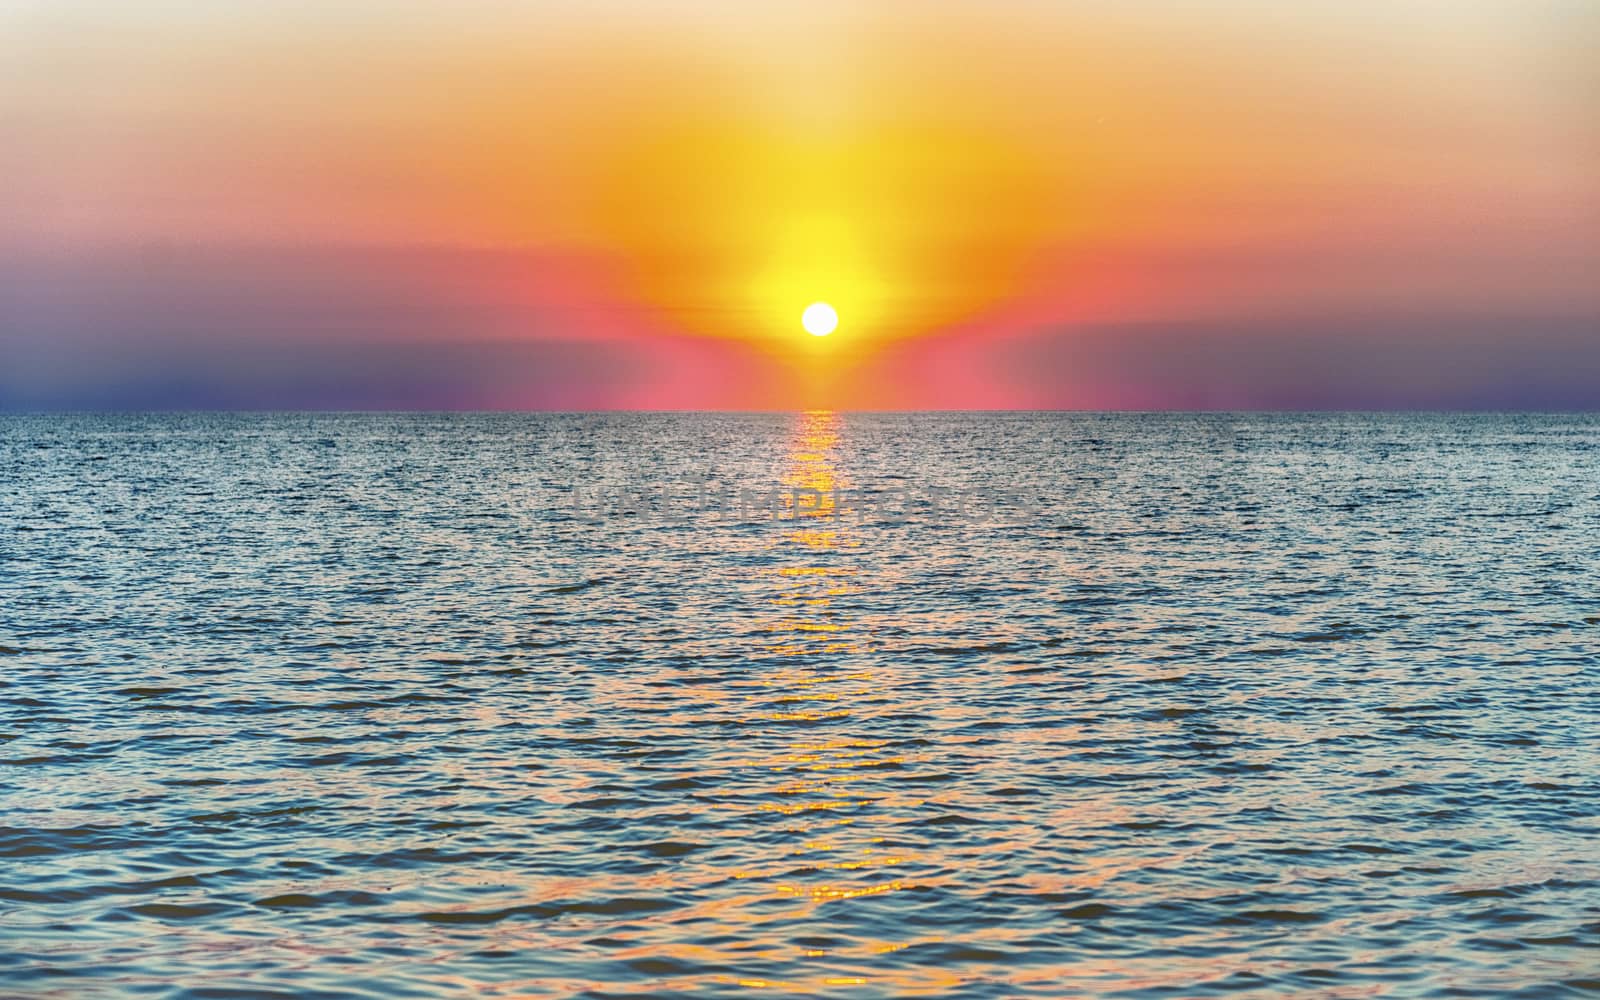 Scenic sunset on the mediterranean sea by marcorubino